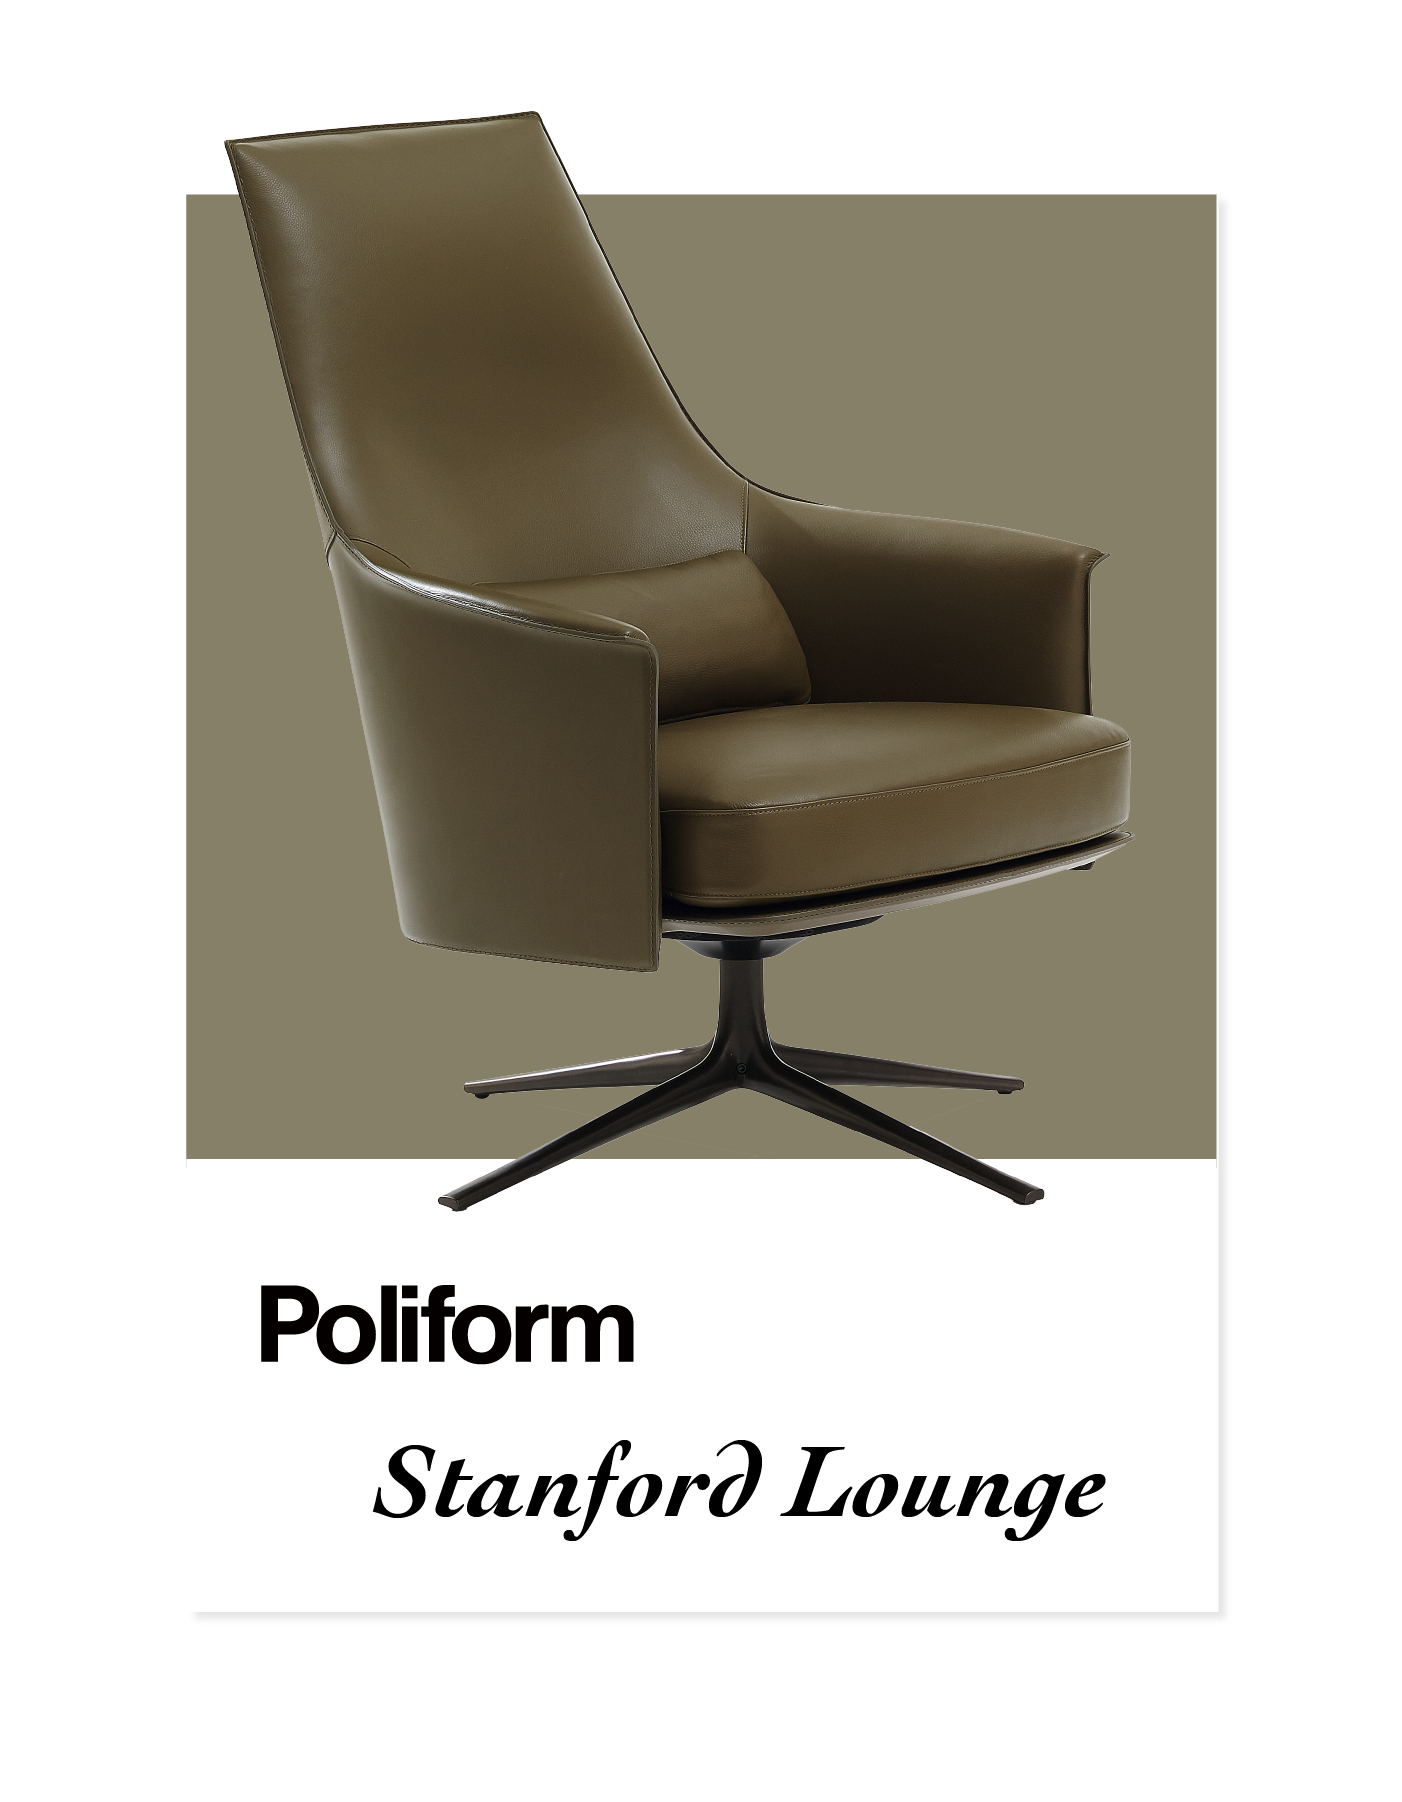 Poliform_Stanford Lounge